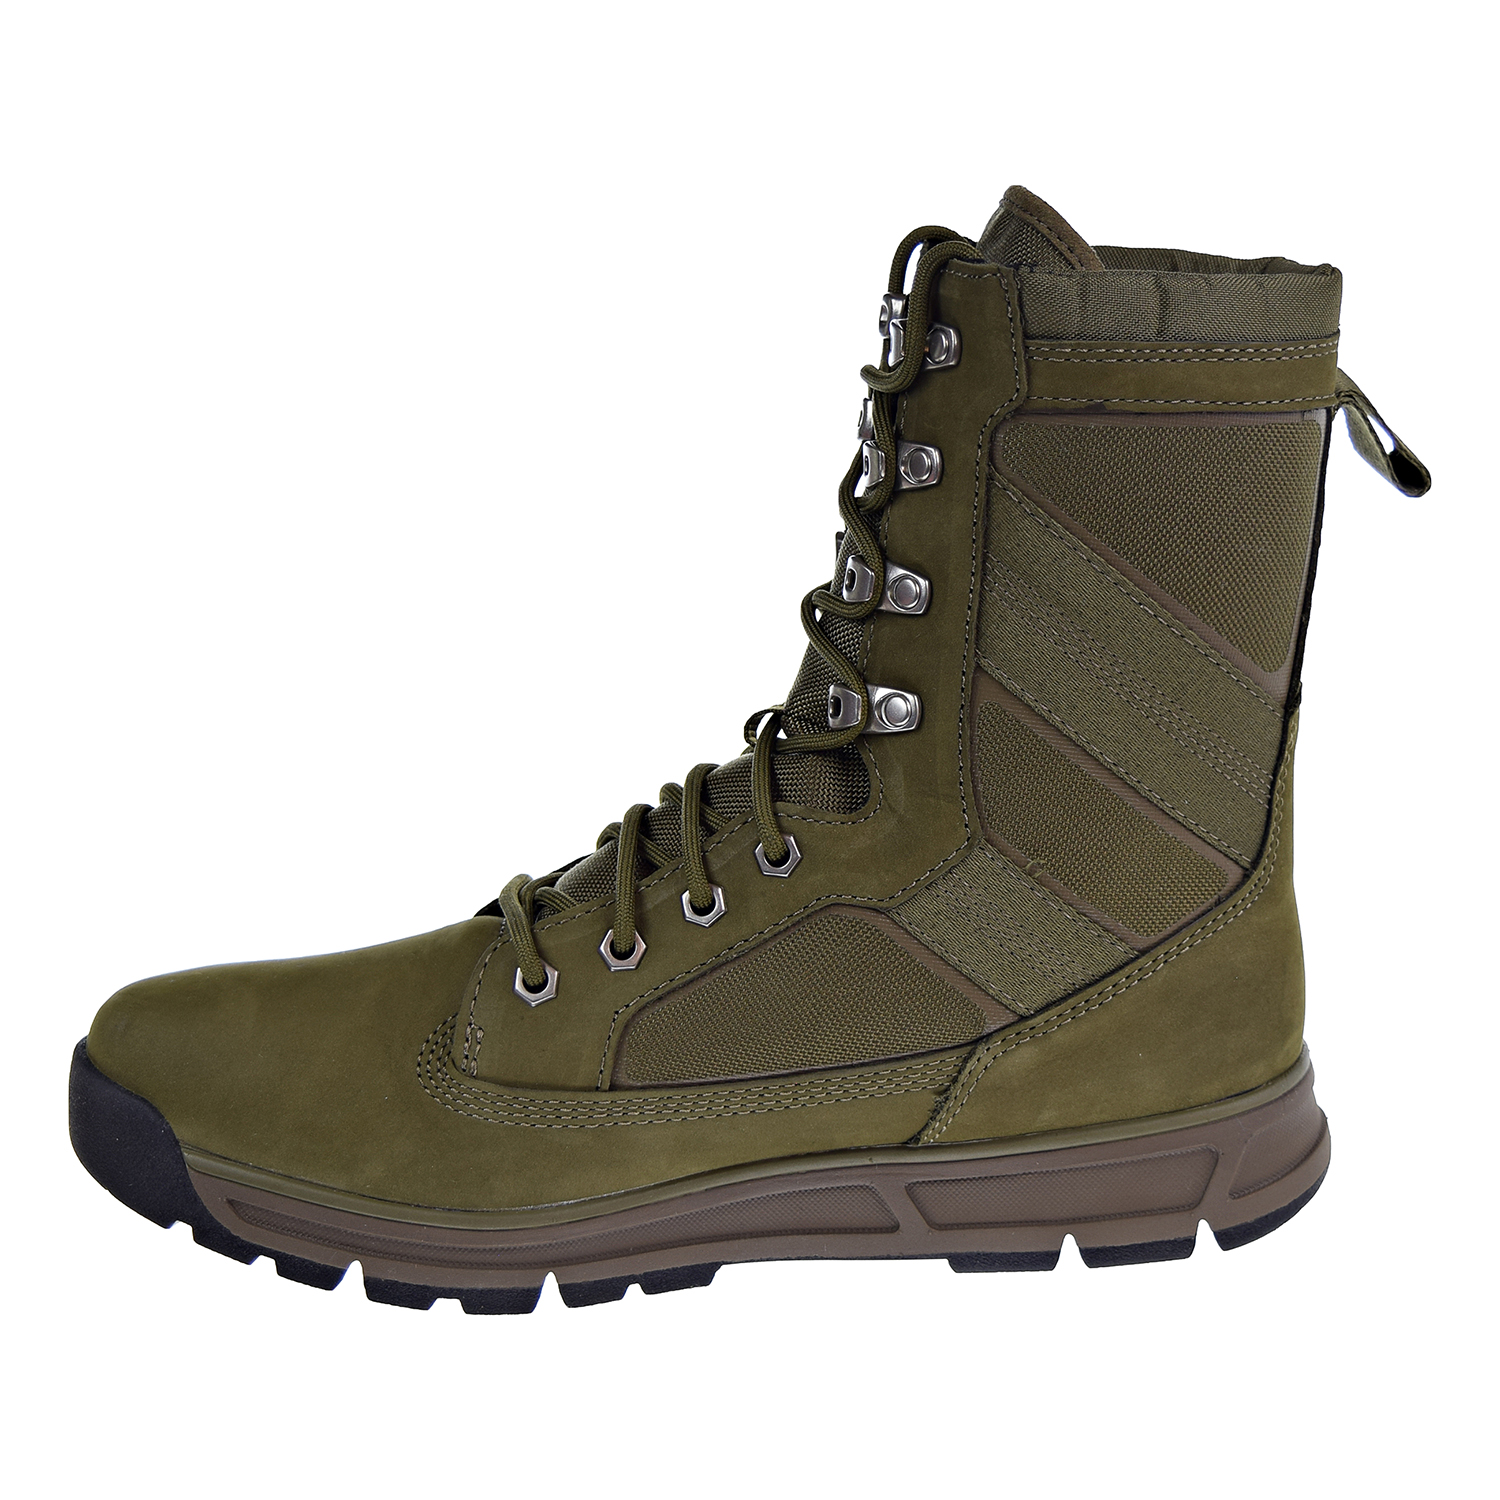 Timberland 8 Inch Men's Field Guide Boots Dark Olive Nubuck tb0a1kw5 | eBay